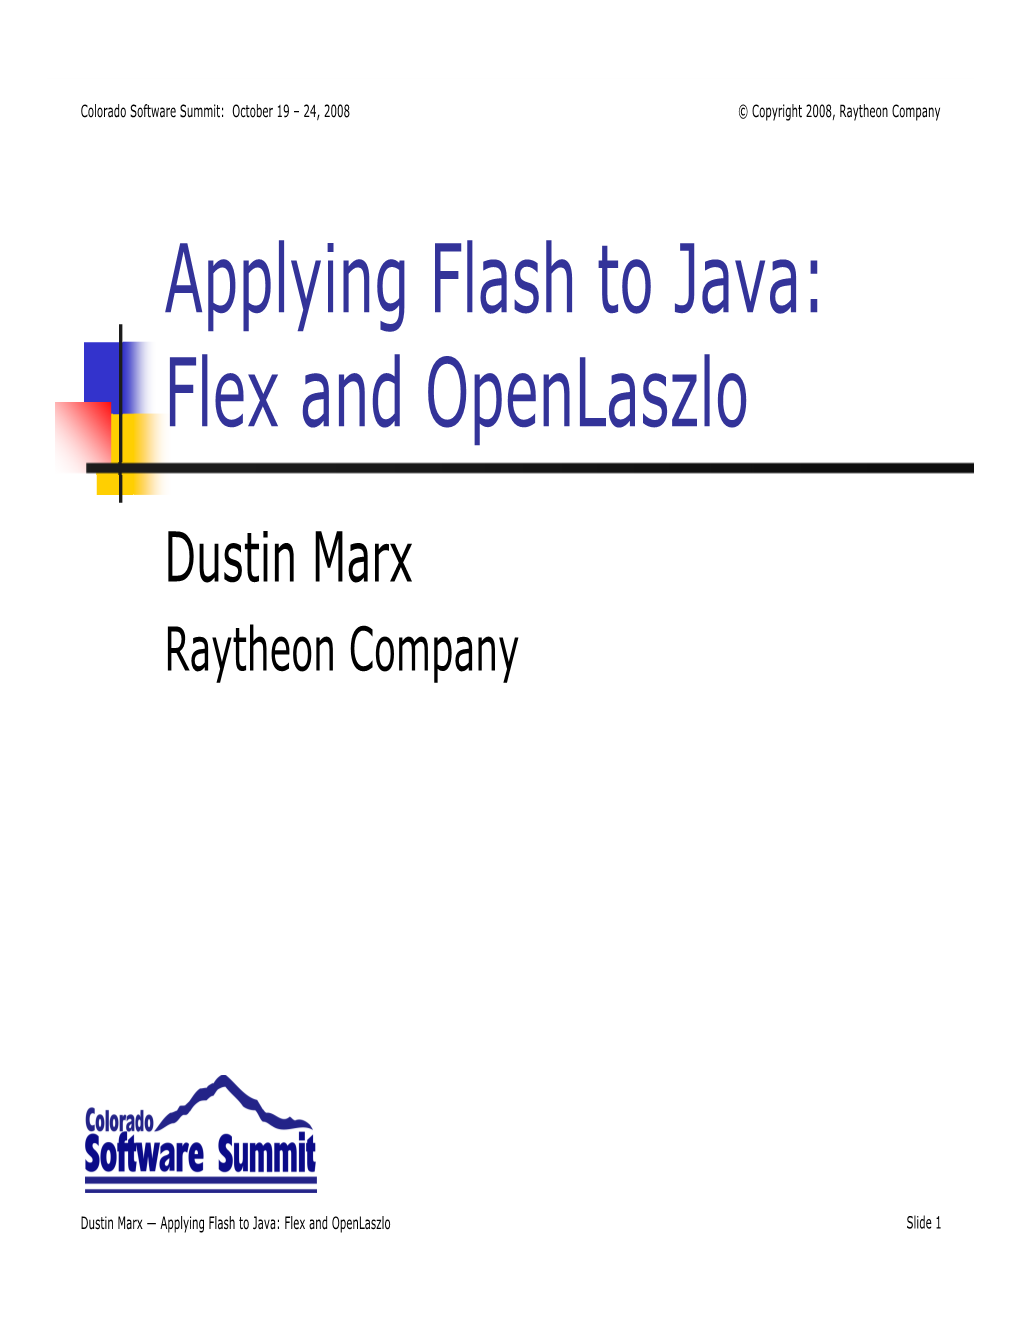 Applying Flash to Java: Flex and Openlaszlo